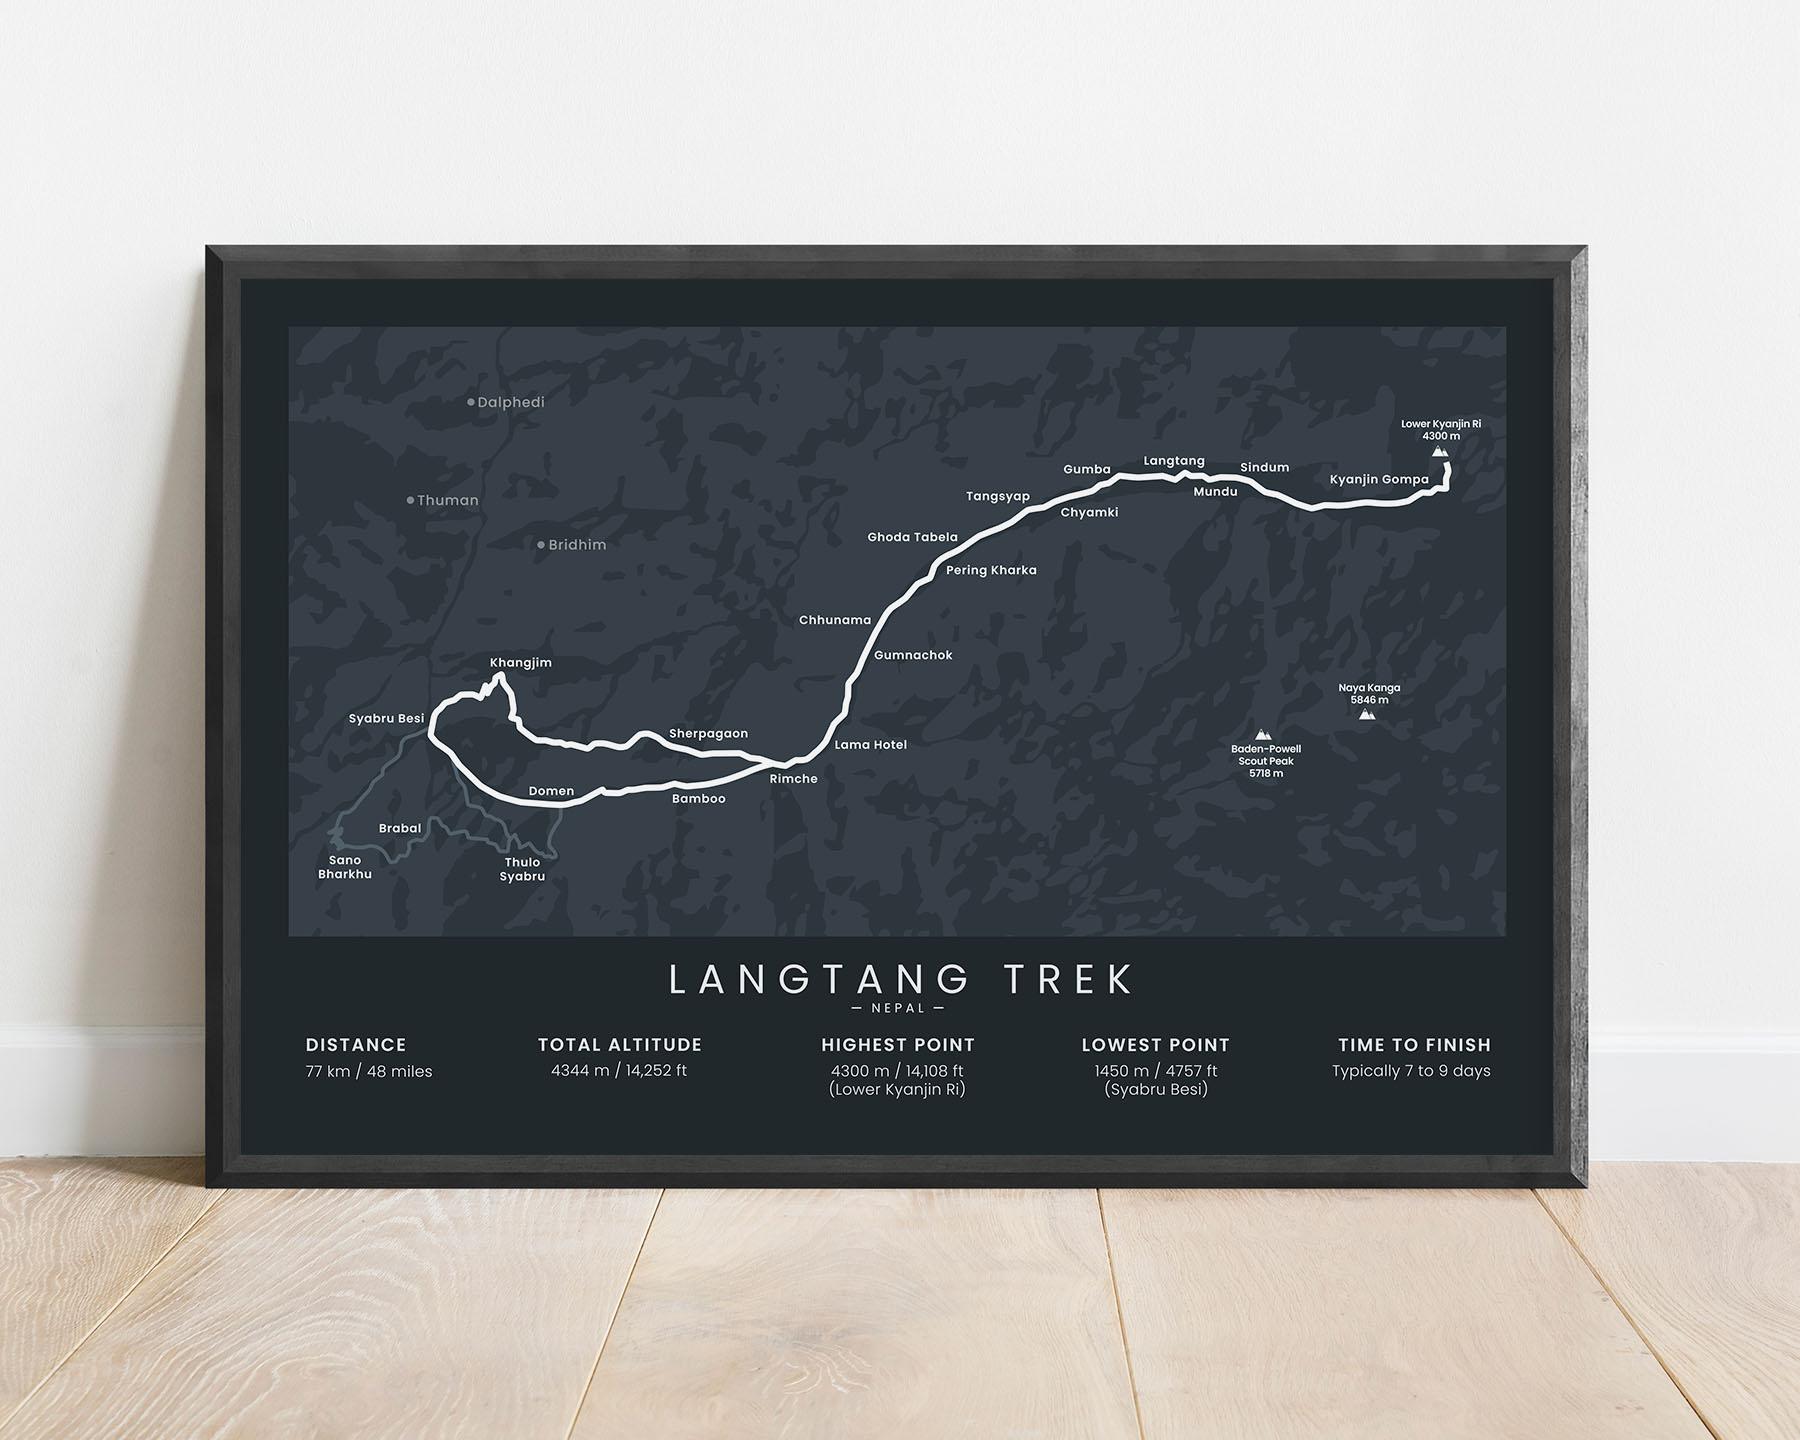 Langtang Valley Trek (Nepal, Himalayas) path poster with black background